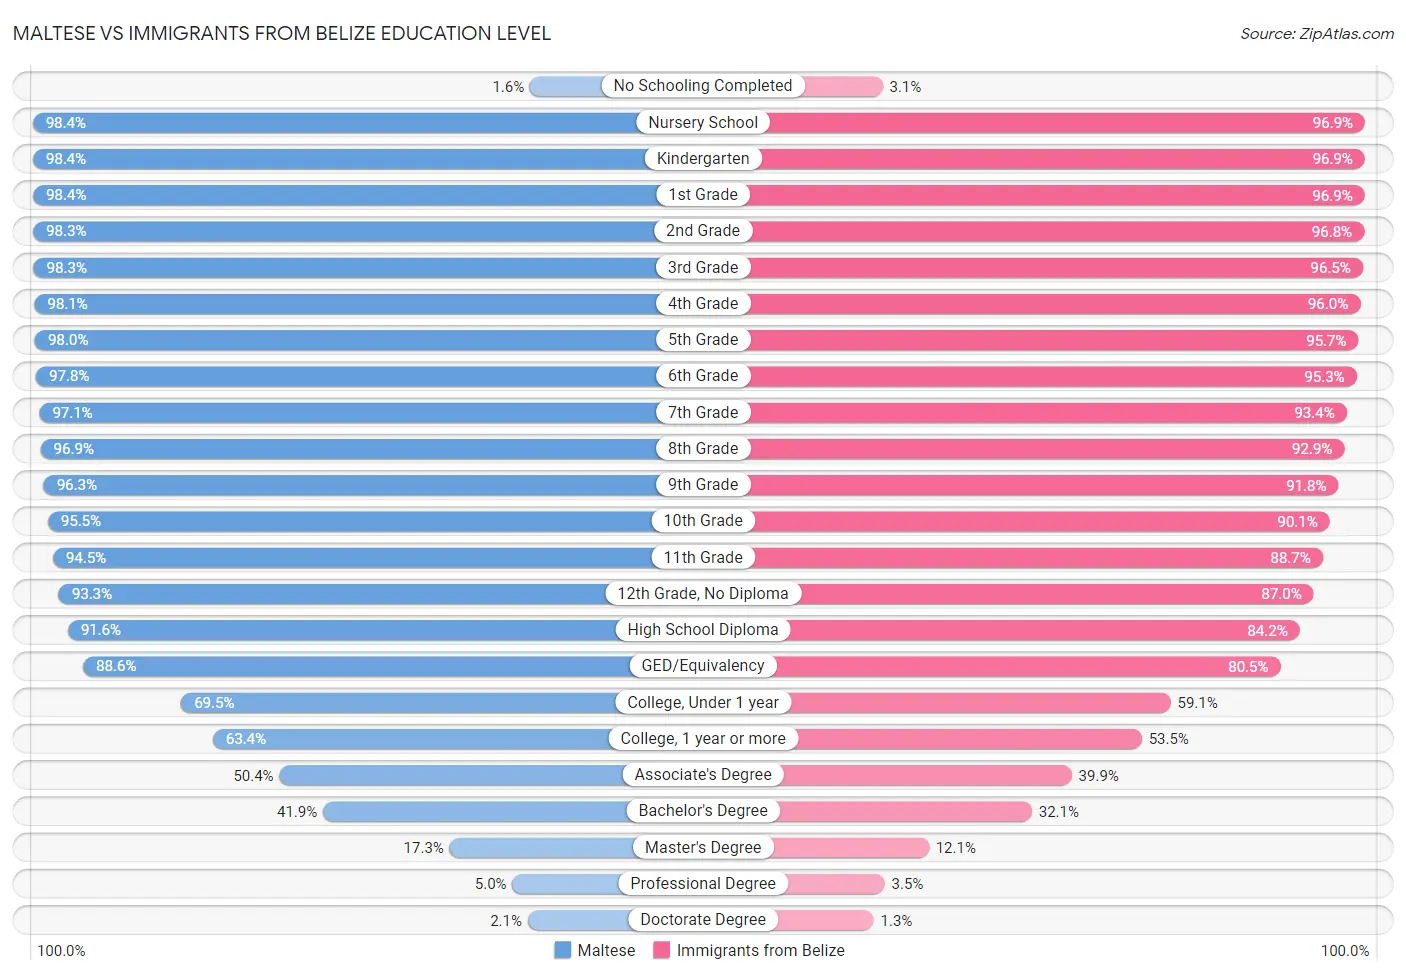 Maltese vs Immigrants from Belize Education Level